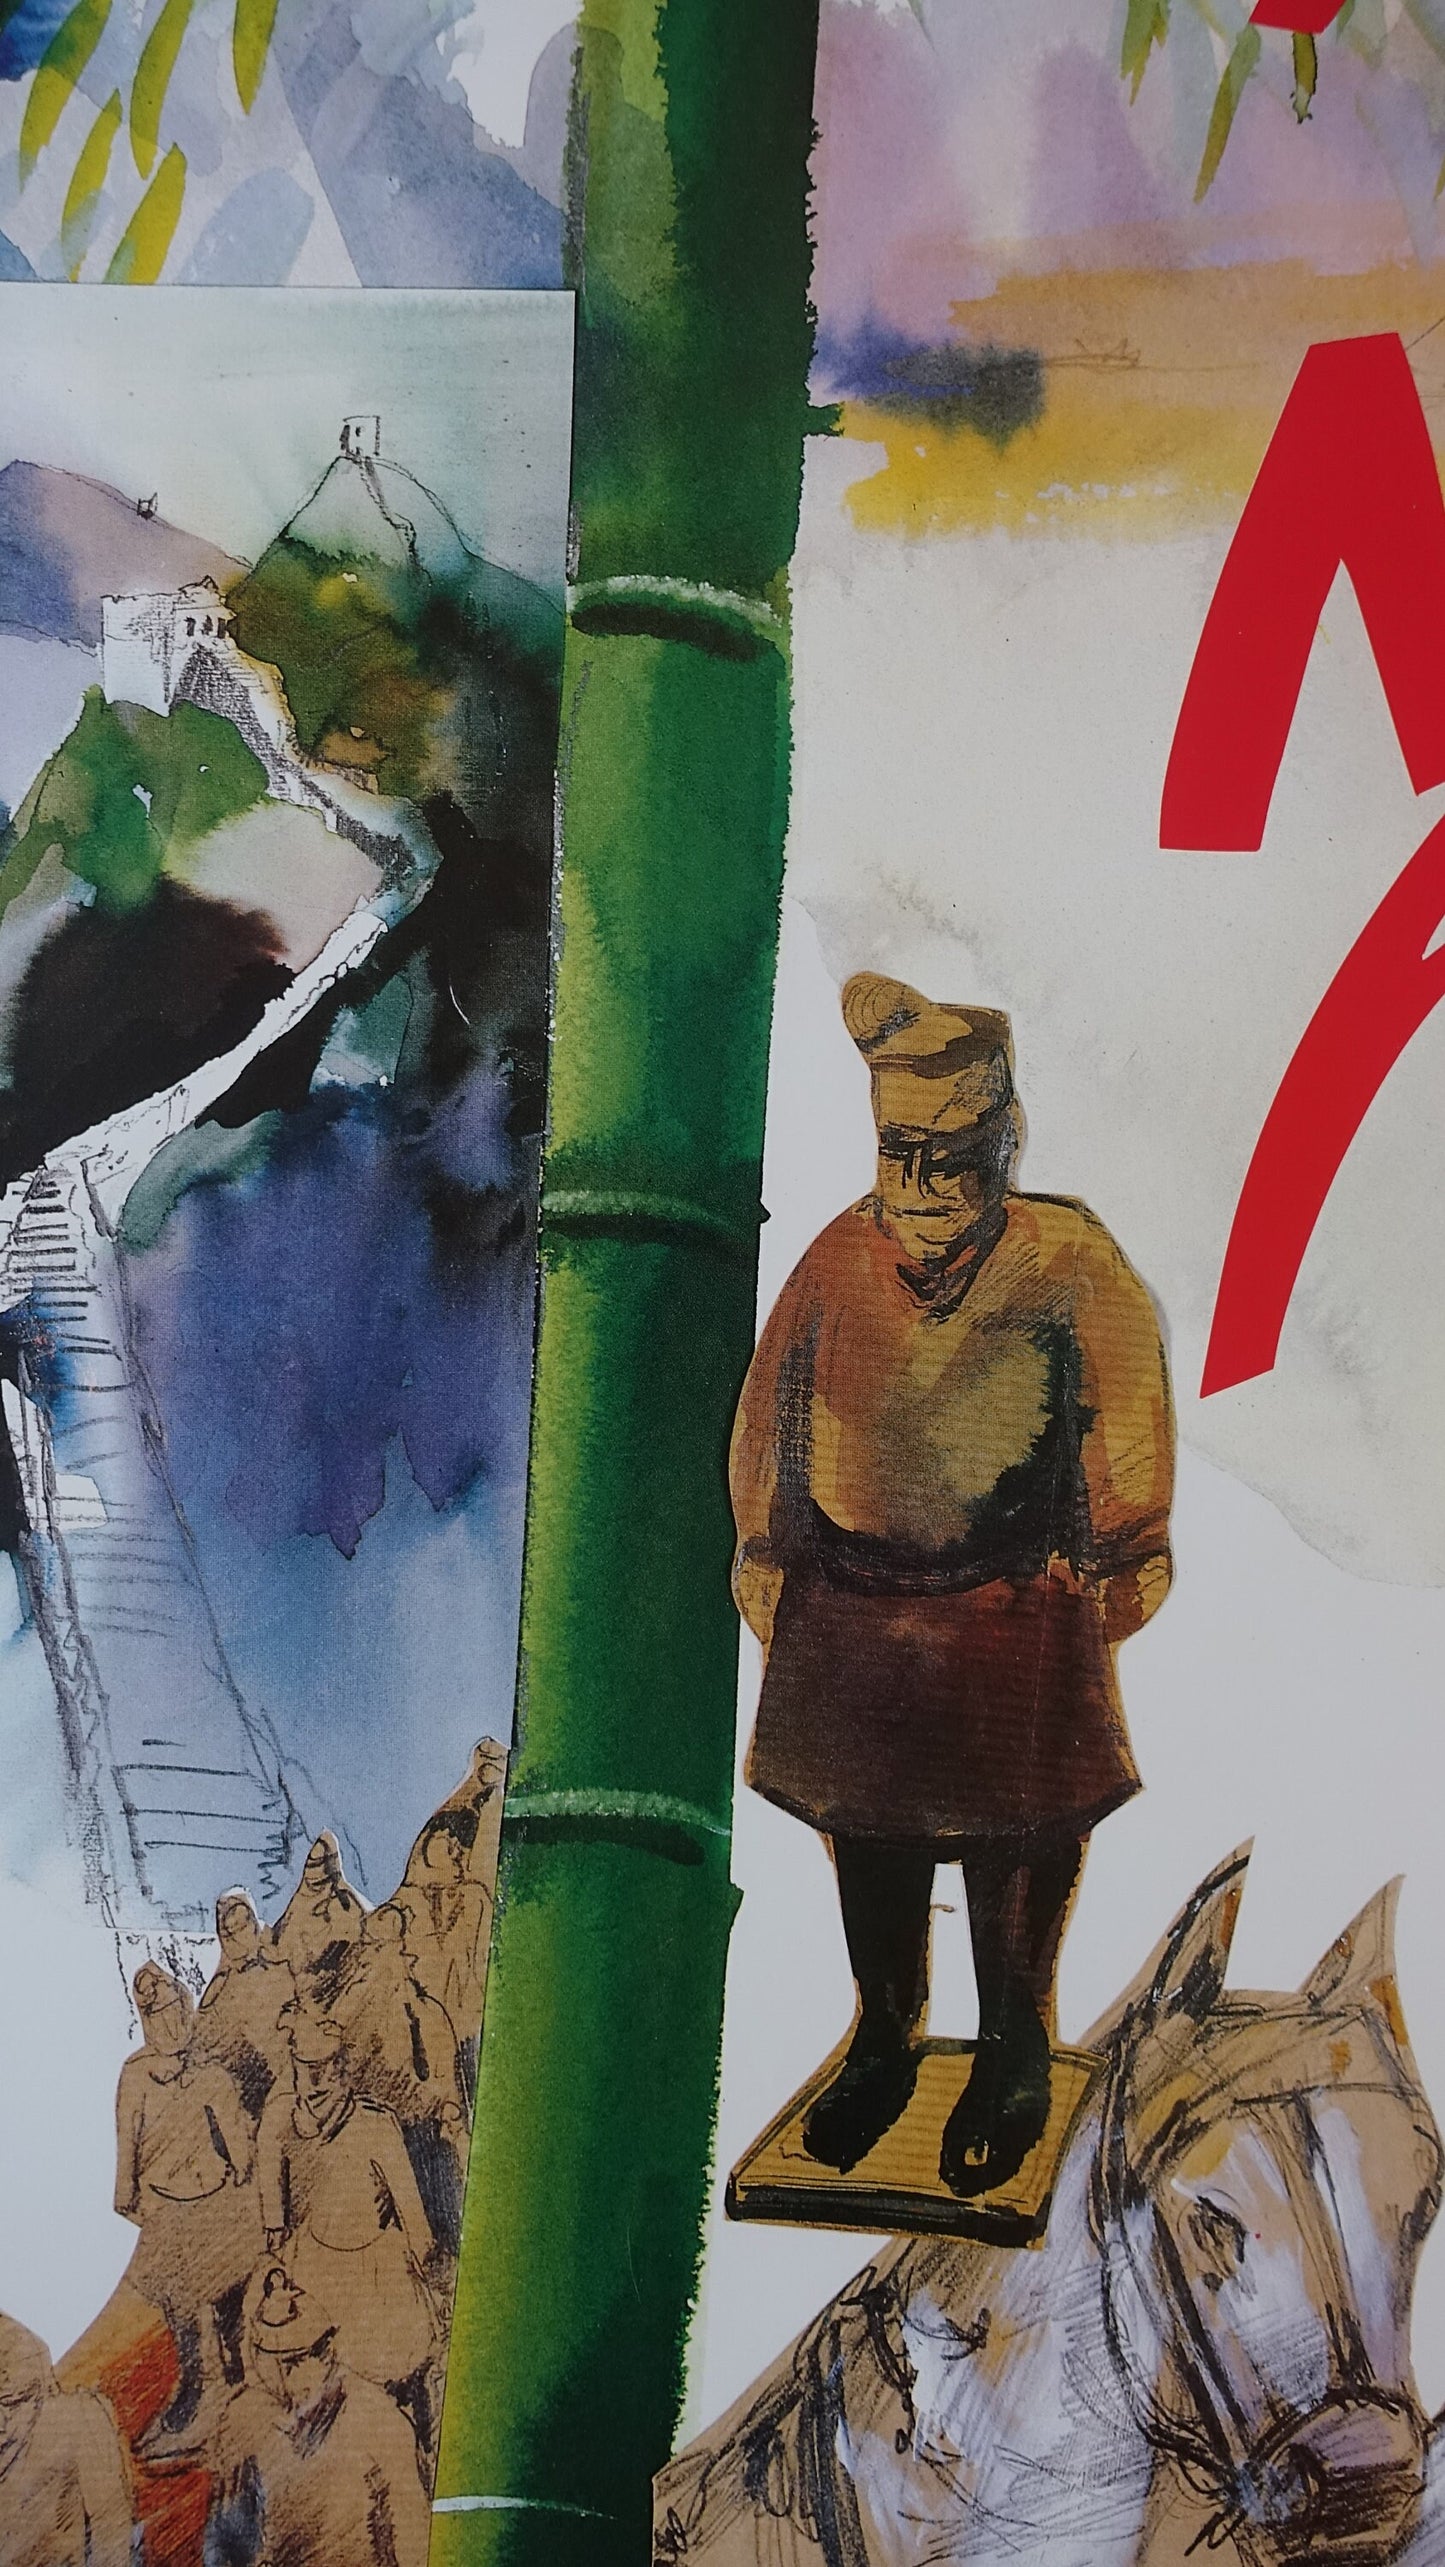 1992 China Travel Poster by SAS - Original Vintage Poster